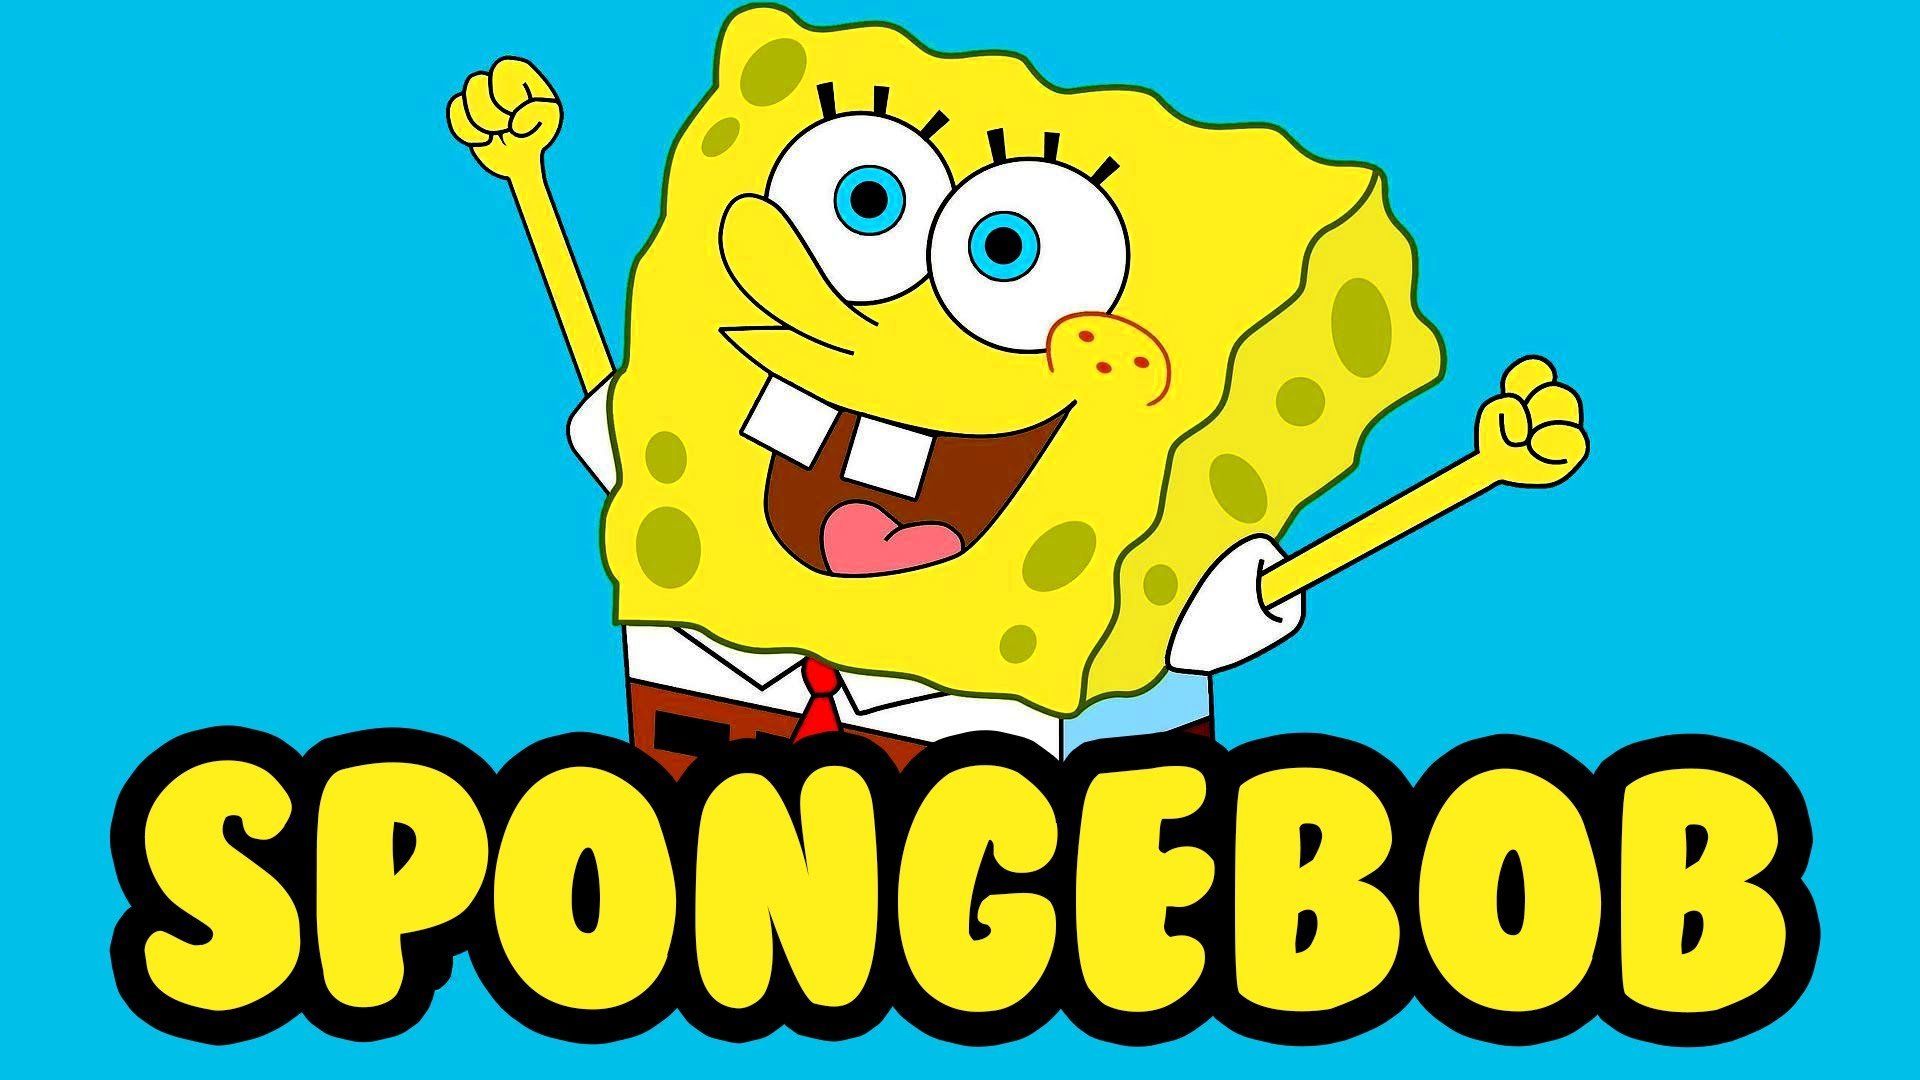 Spongebob Squarepants Cartoon Family Animation Wallpaper